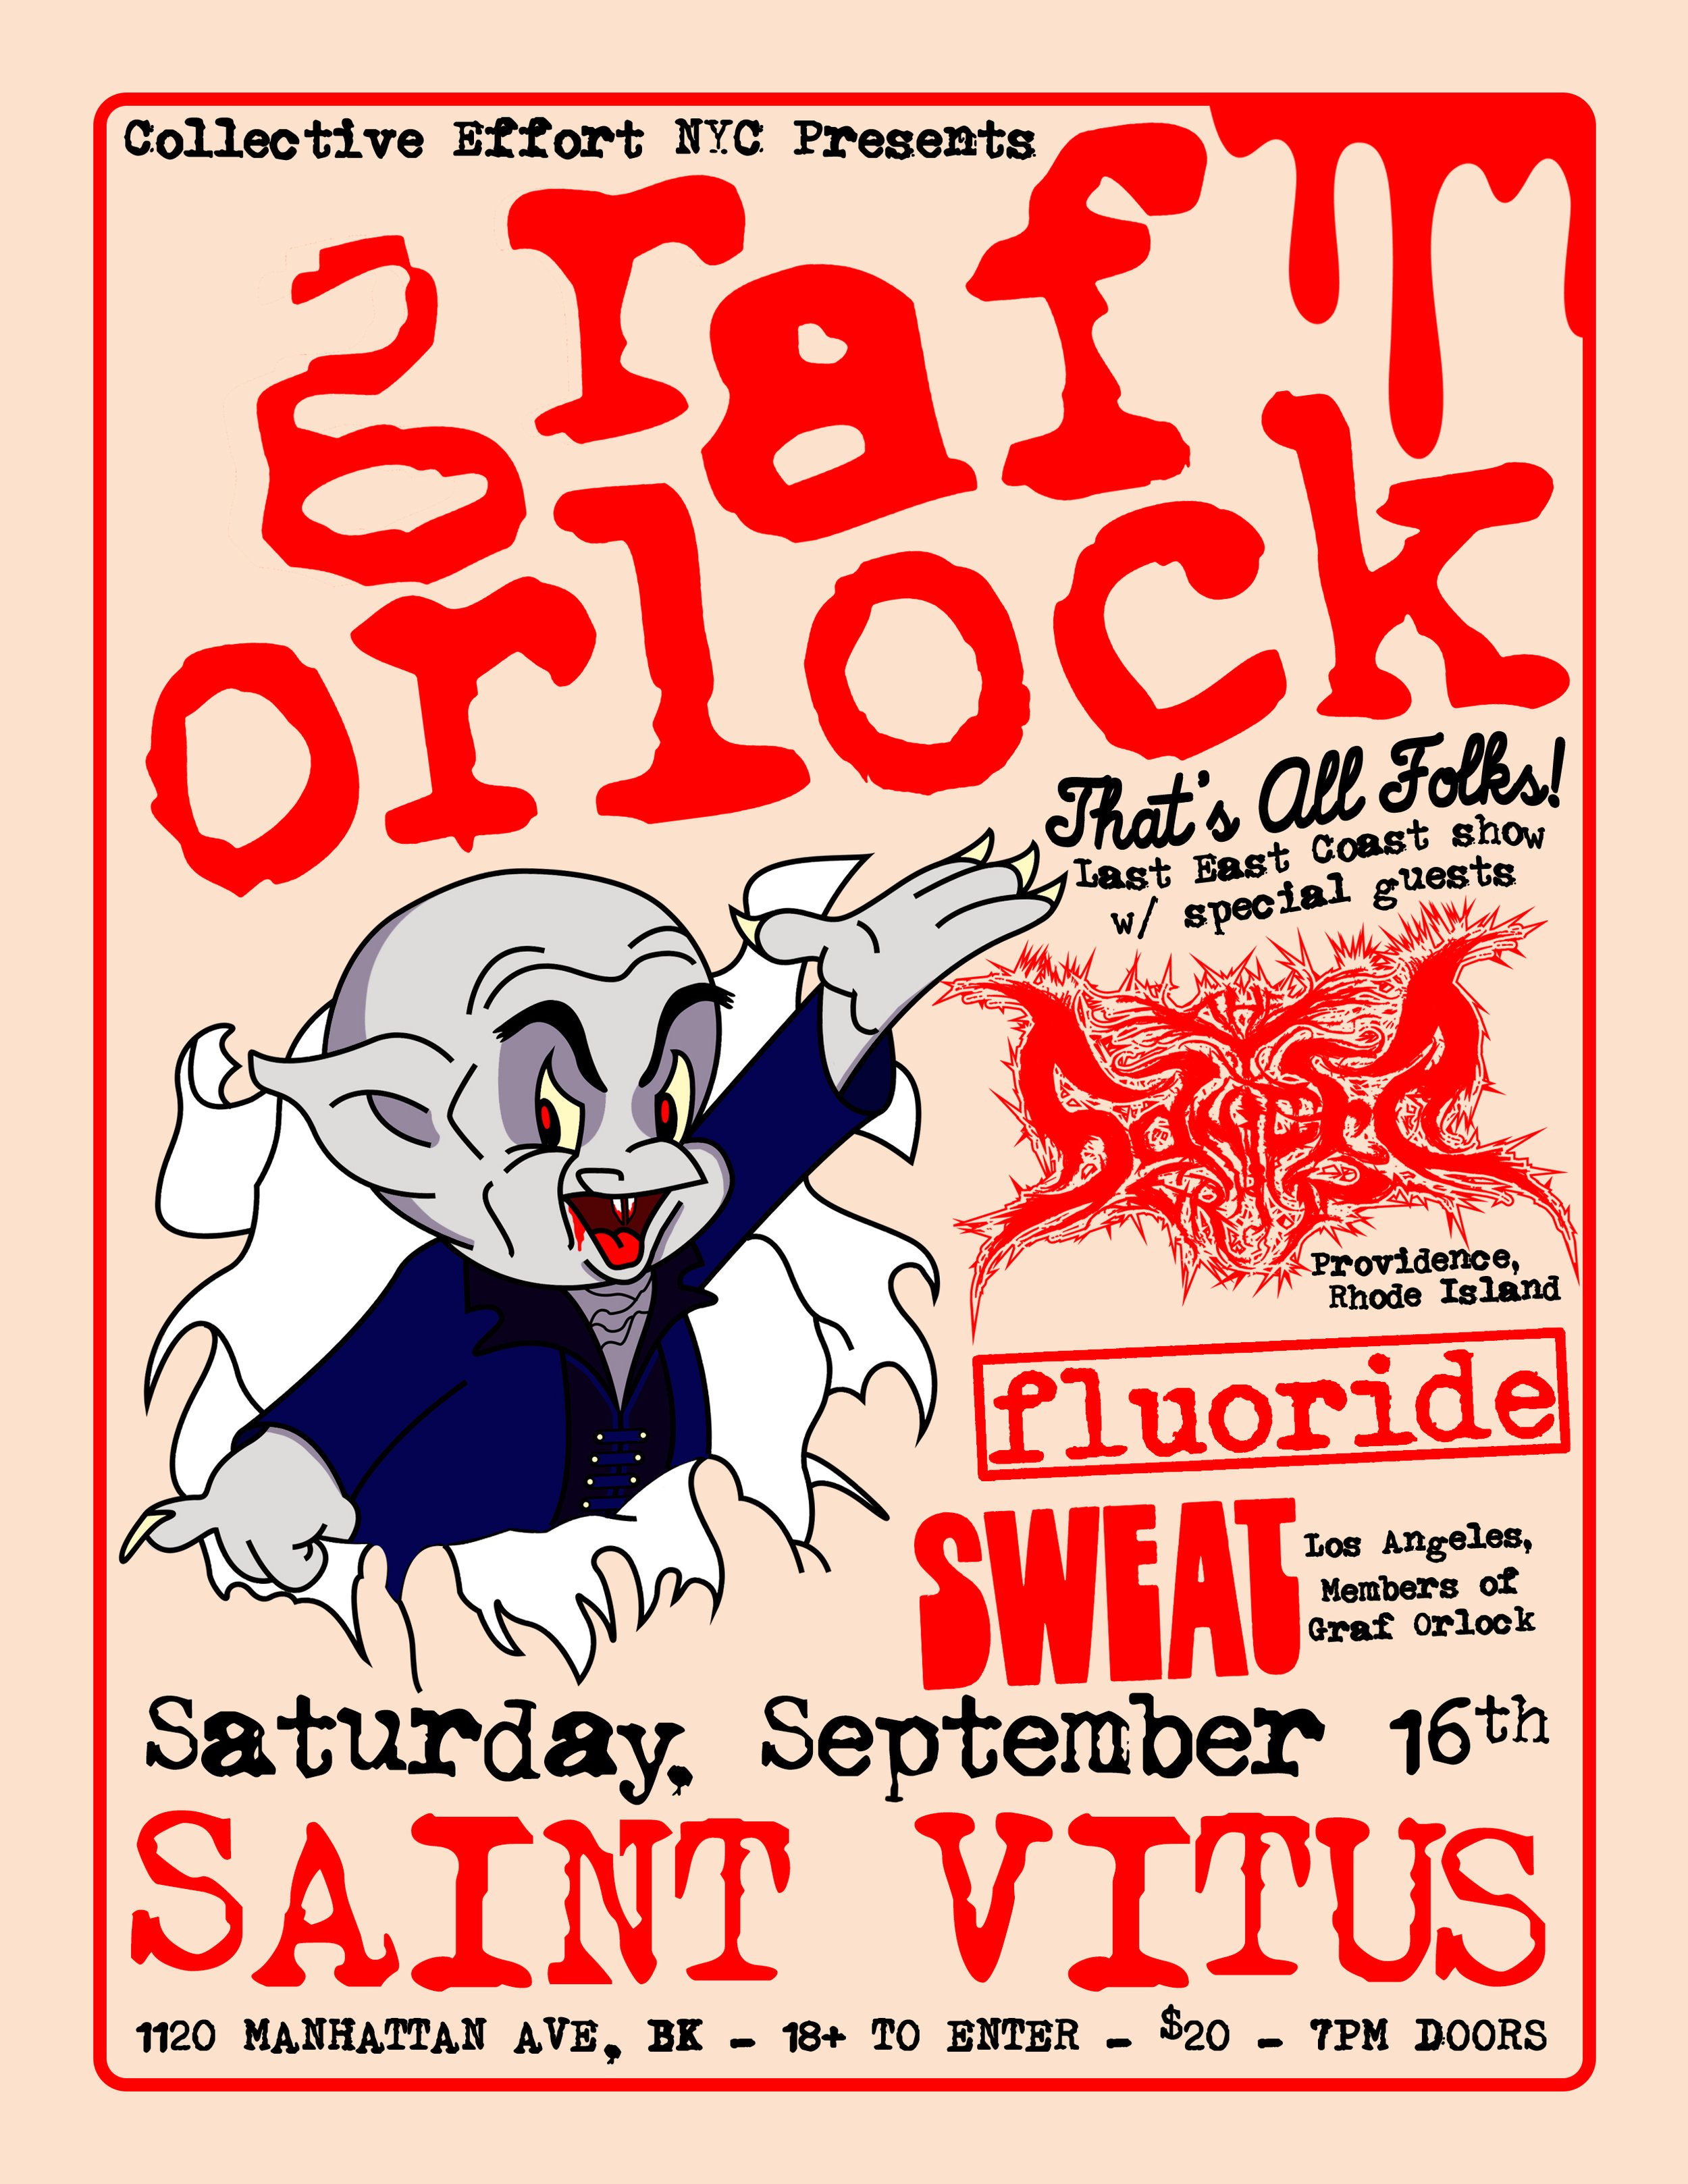 Last East Coast Graf Orlock Show Sept 16th St Vitus, Brooklyn Tickets  Available 12pm EST July 25th — Vitriol Records